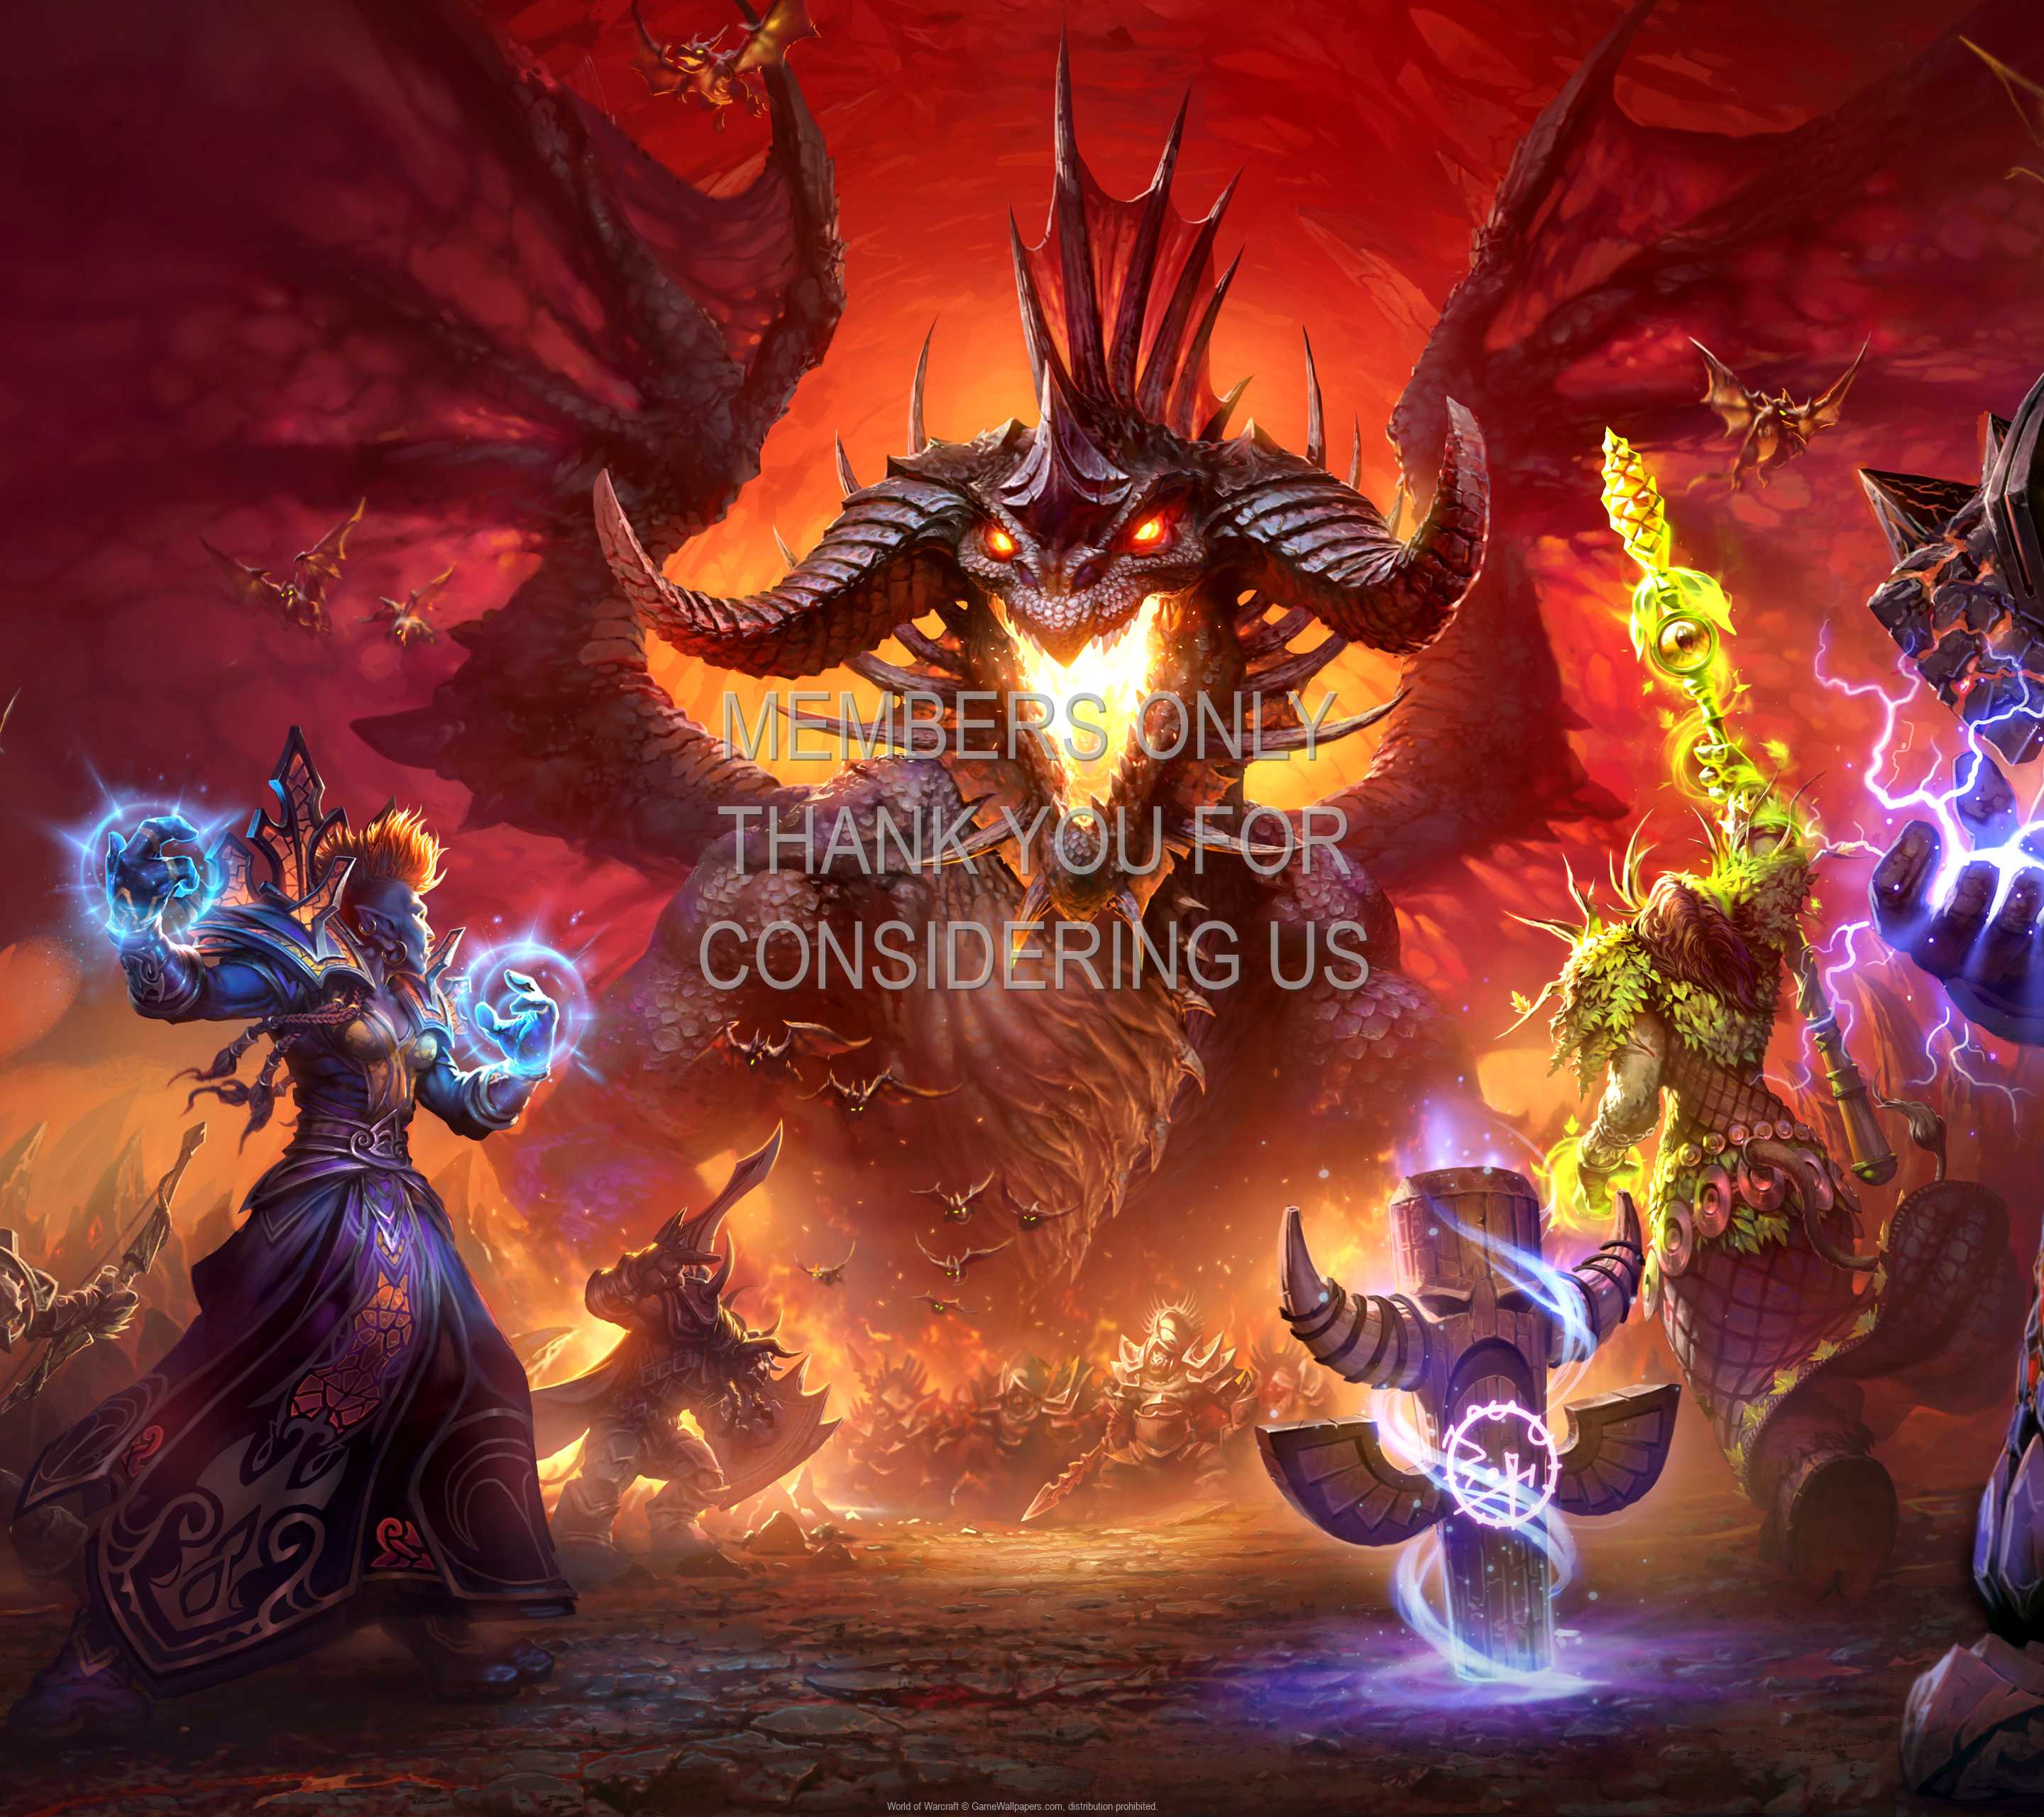 World of Warcraft 1440p Horizontal Mobile wallpaper or background 19